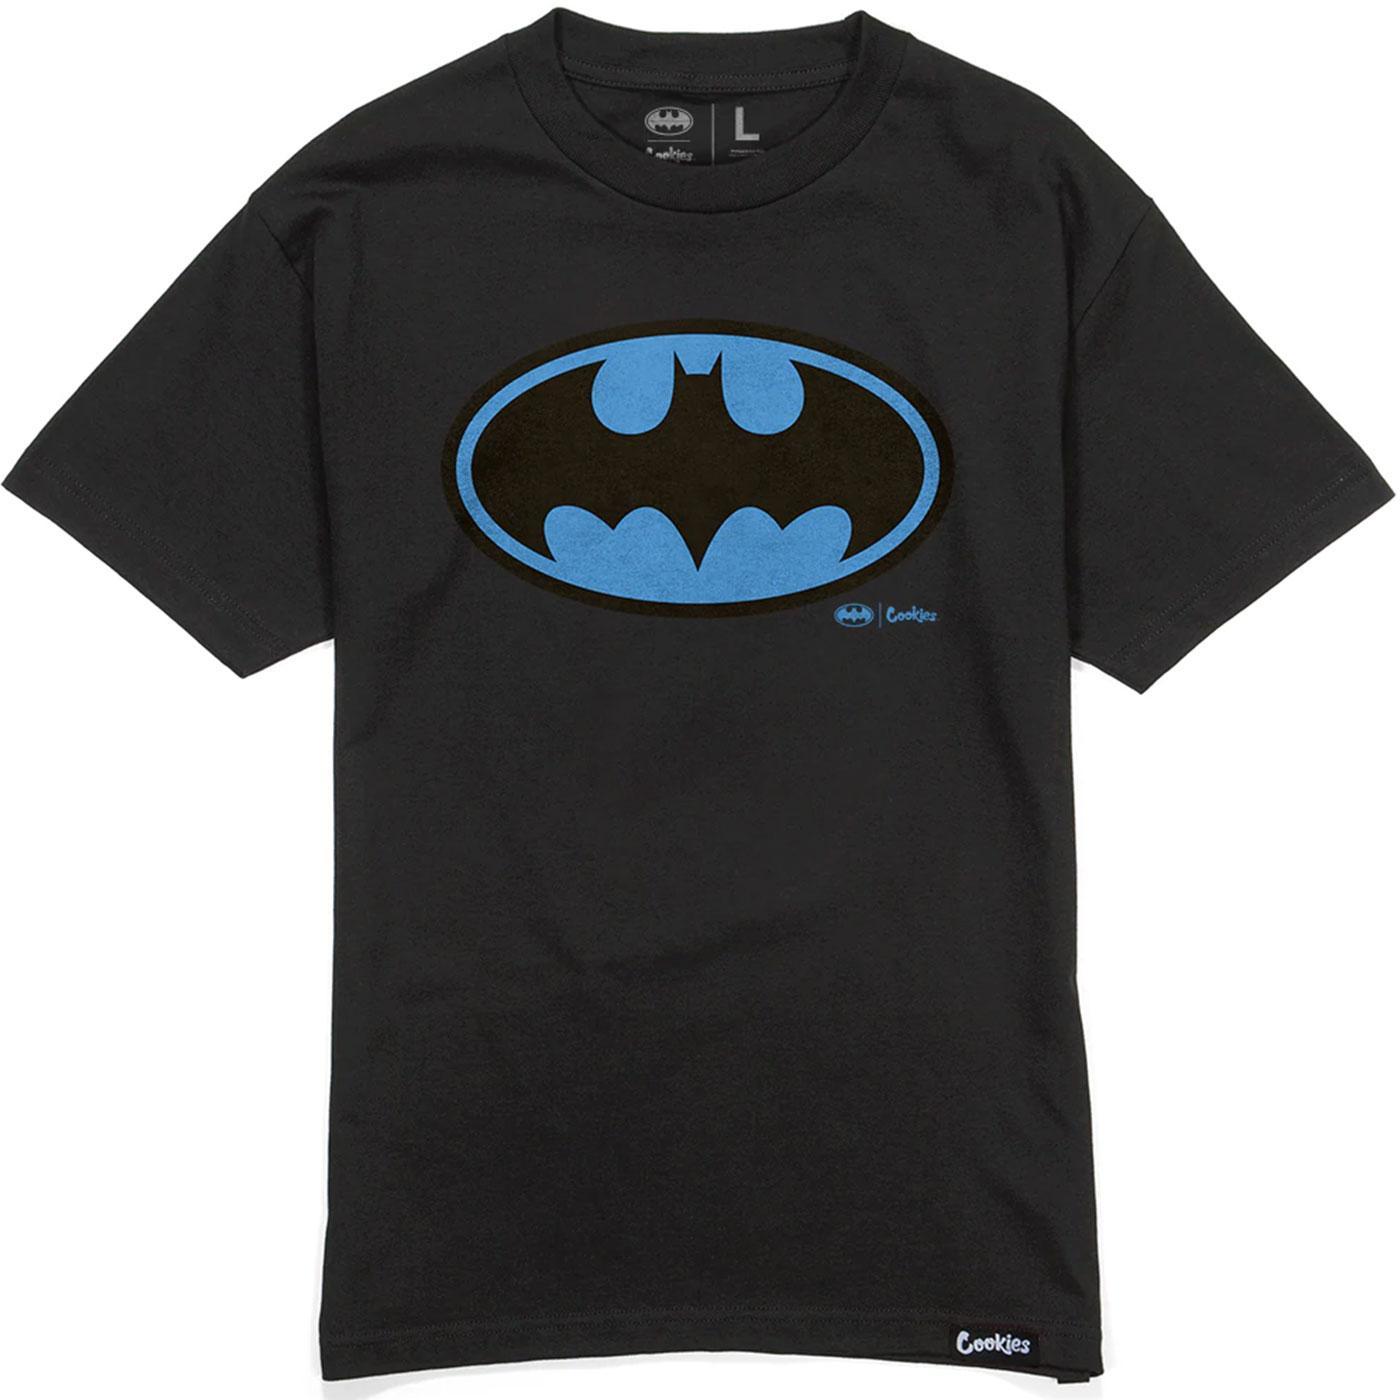 Cookies x Official Batman Bat Symbol Tee (Black) | Cookies Clothing